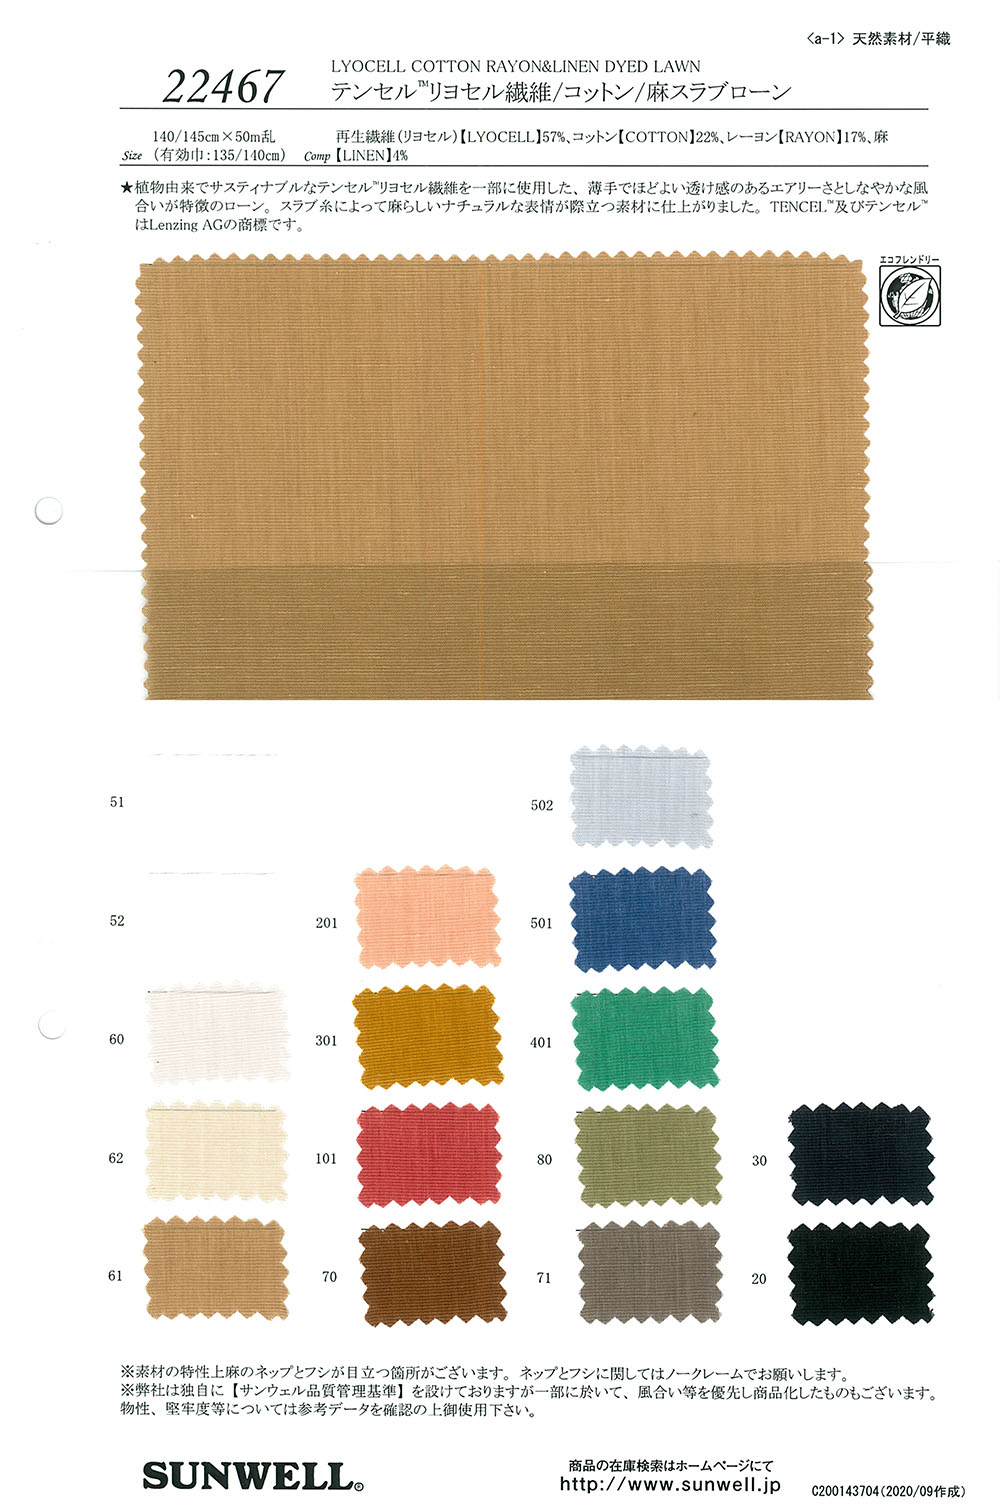 22467 Tencel (TM) Lyocell-Faser/Baumwolle/Leinen-Plattenrasen[Textilgewebe] SUNWELL